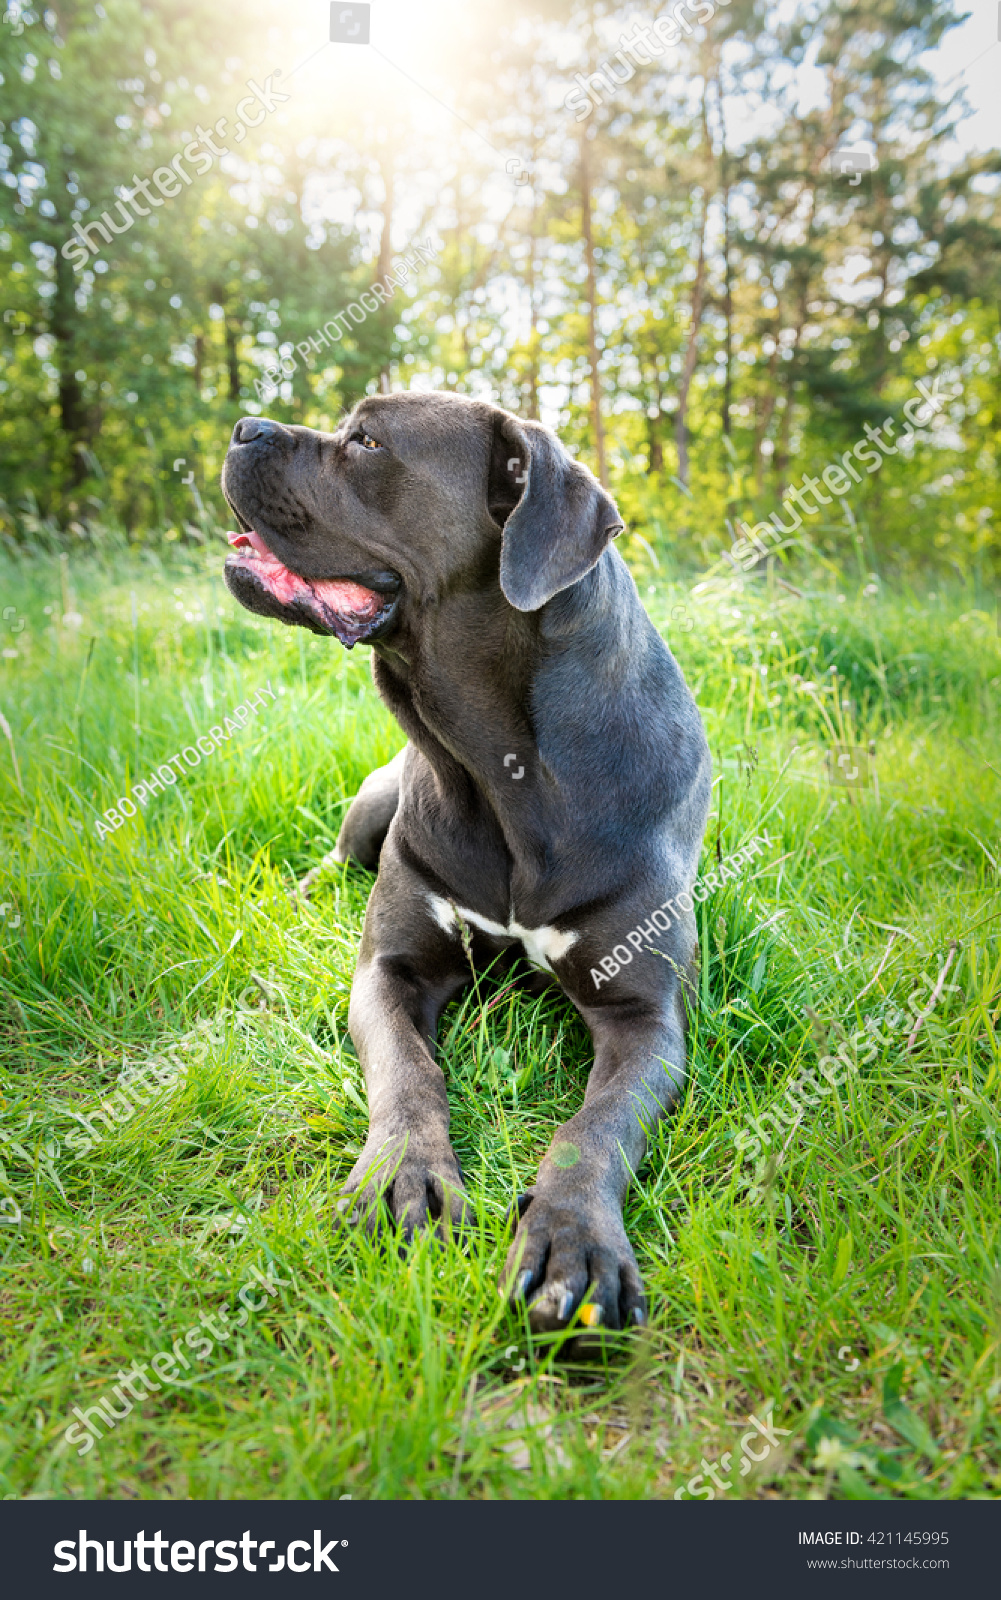 Cane Corso, Italian Mastiff Dog Stock Photo 421145995